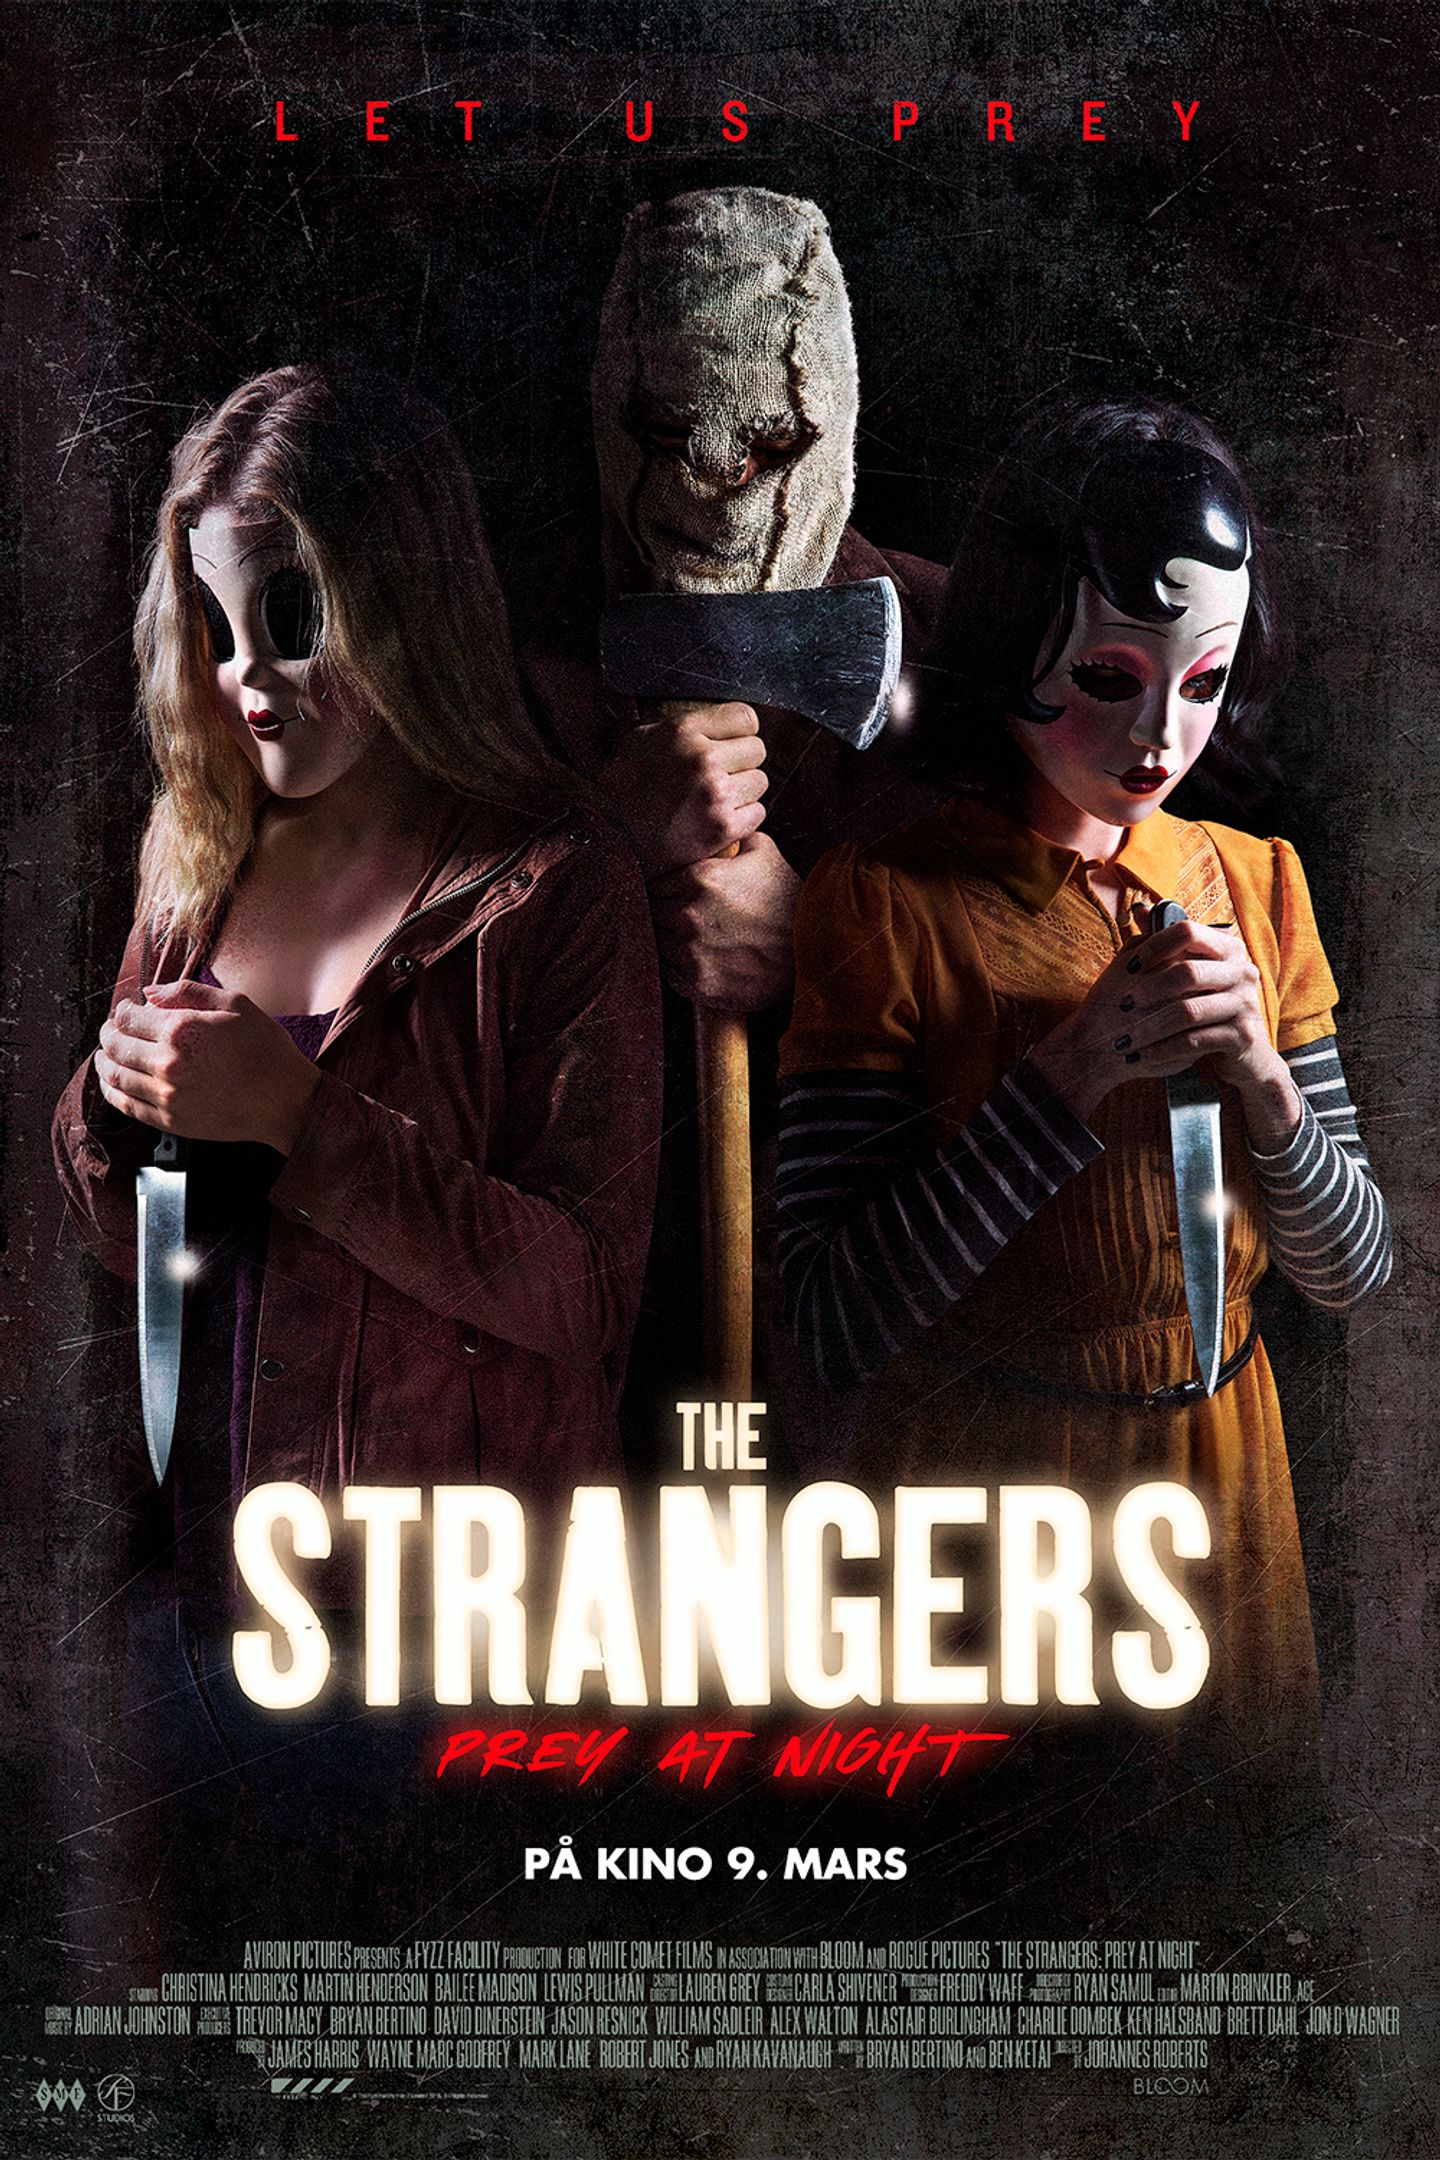 Plakat for 'Strangers: prey at night'